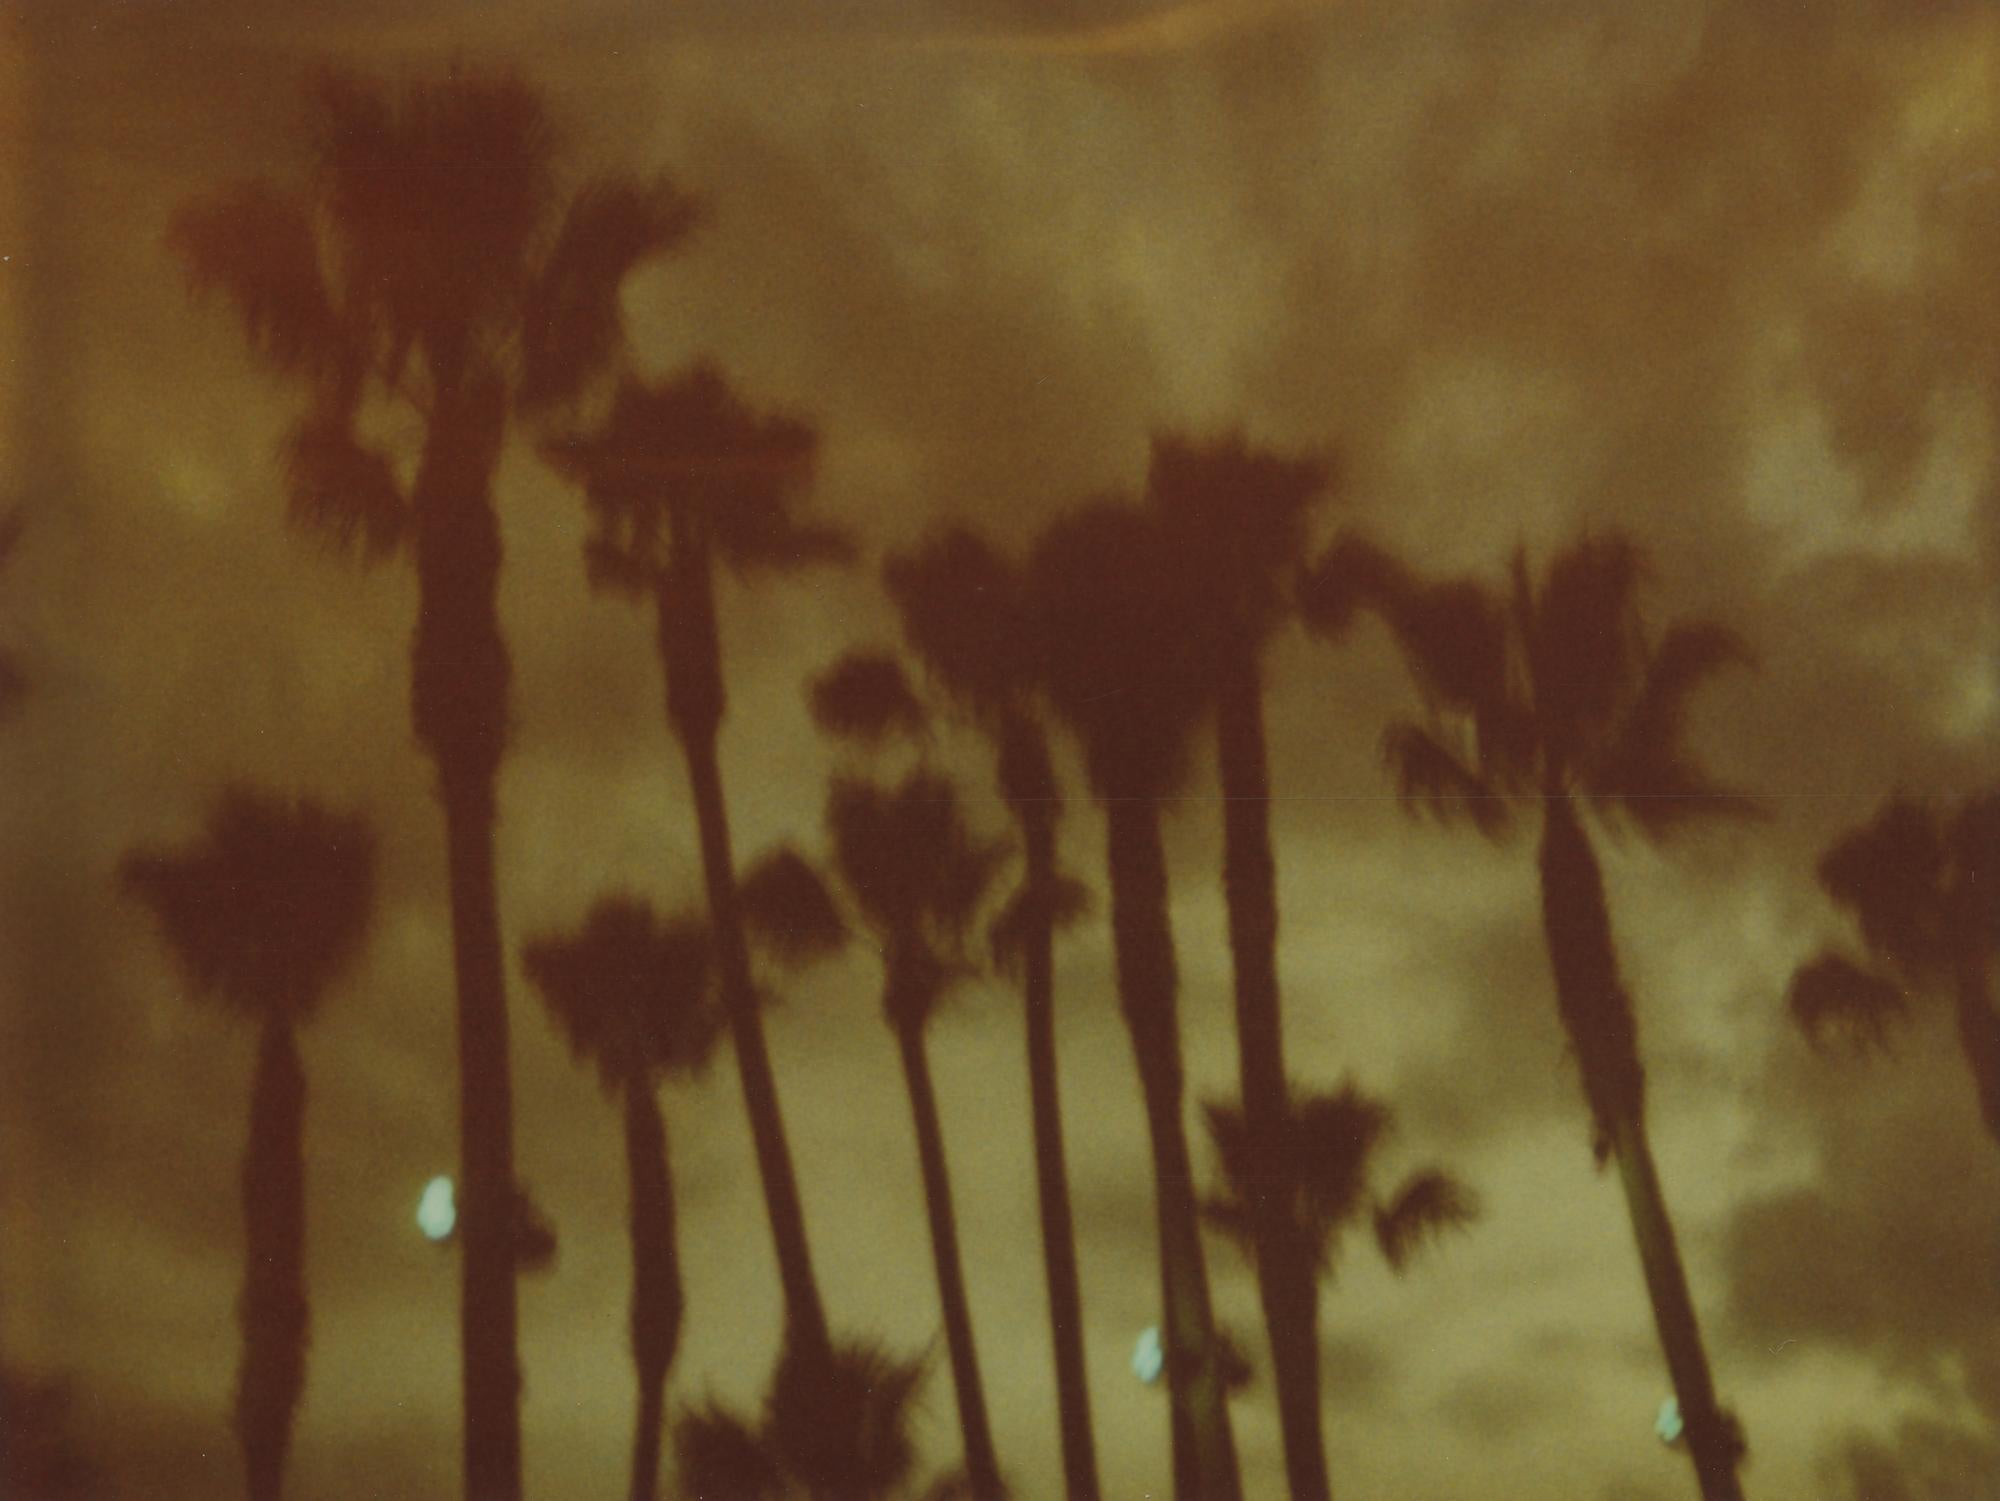 Stefanie Schneider Portrait Photograph - Palm Trees at Night (Stranger than Paradise) - analog